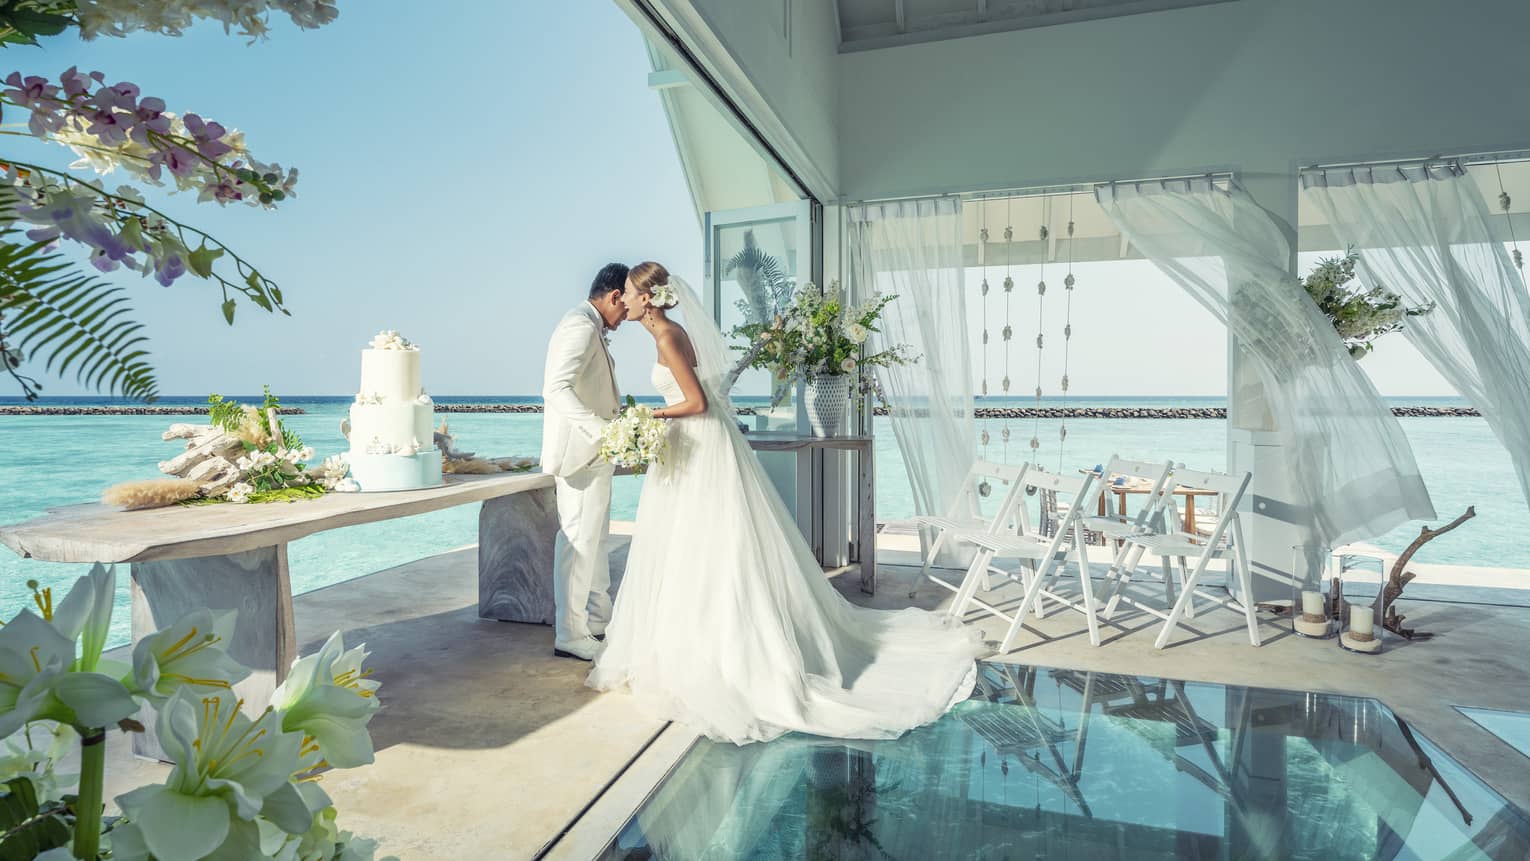 Bride and groom embrace in overwater wedding bungalow